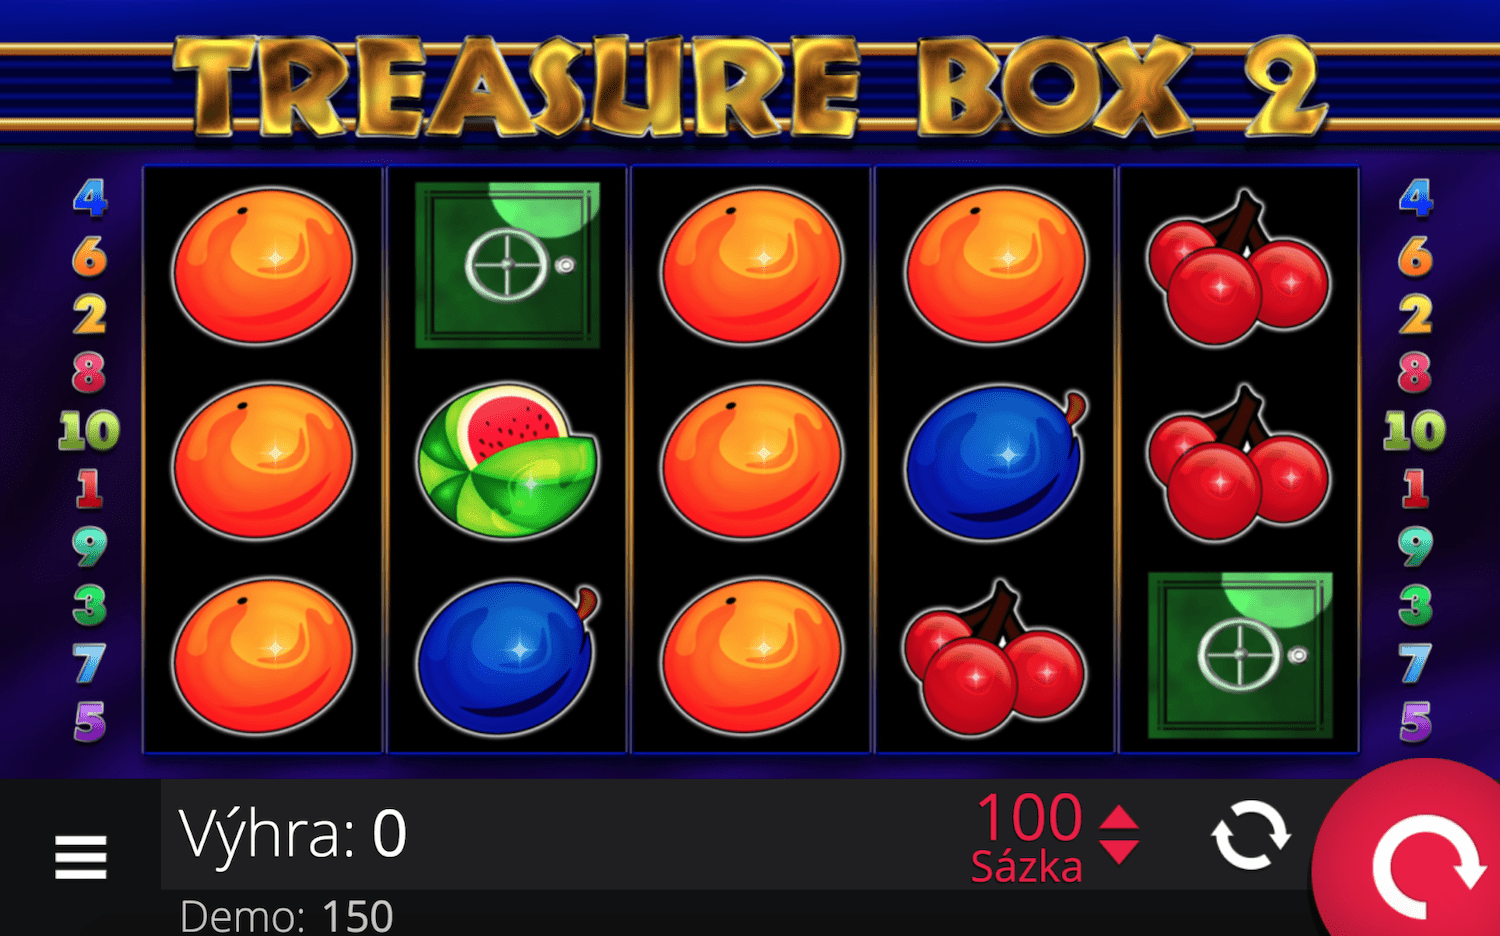 Automat Treasure Box 2 od e-gaming - ukážka valcov, symbol Trezor